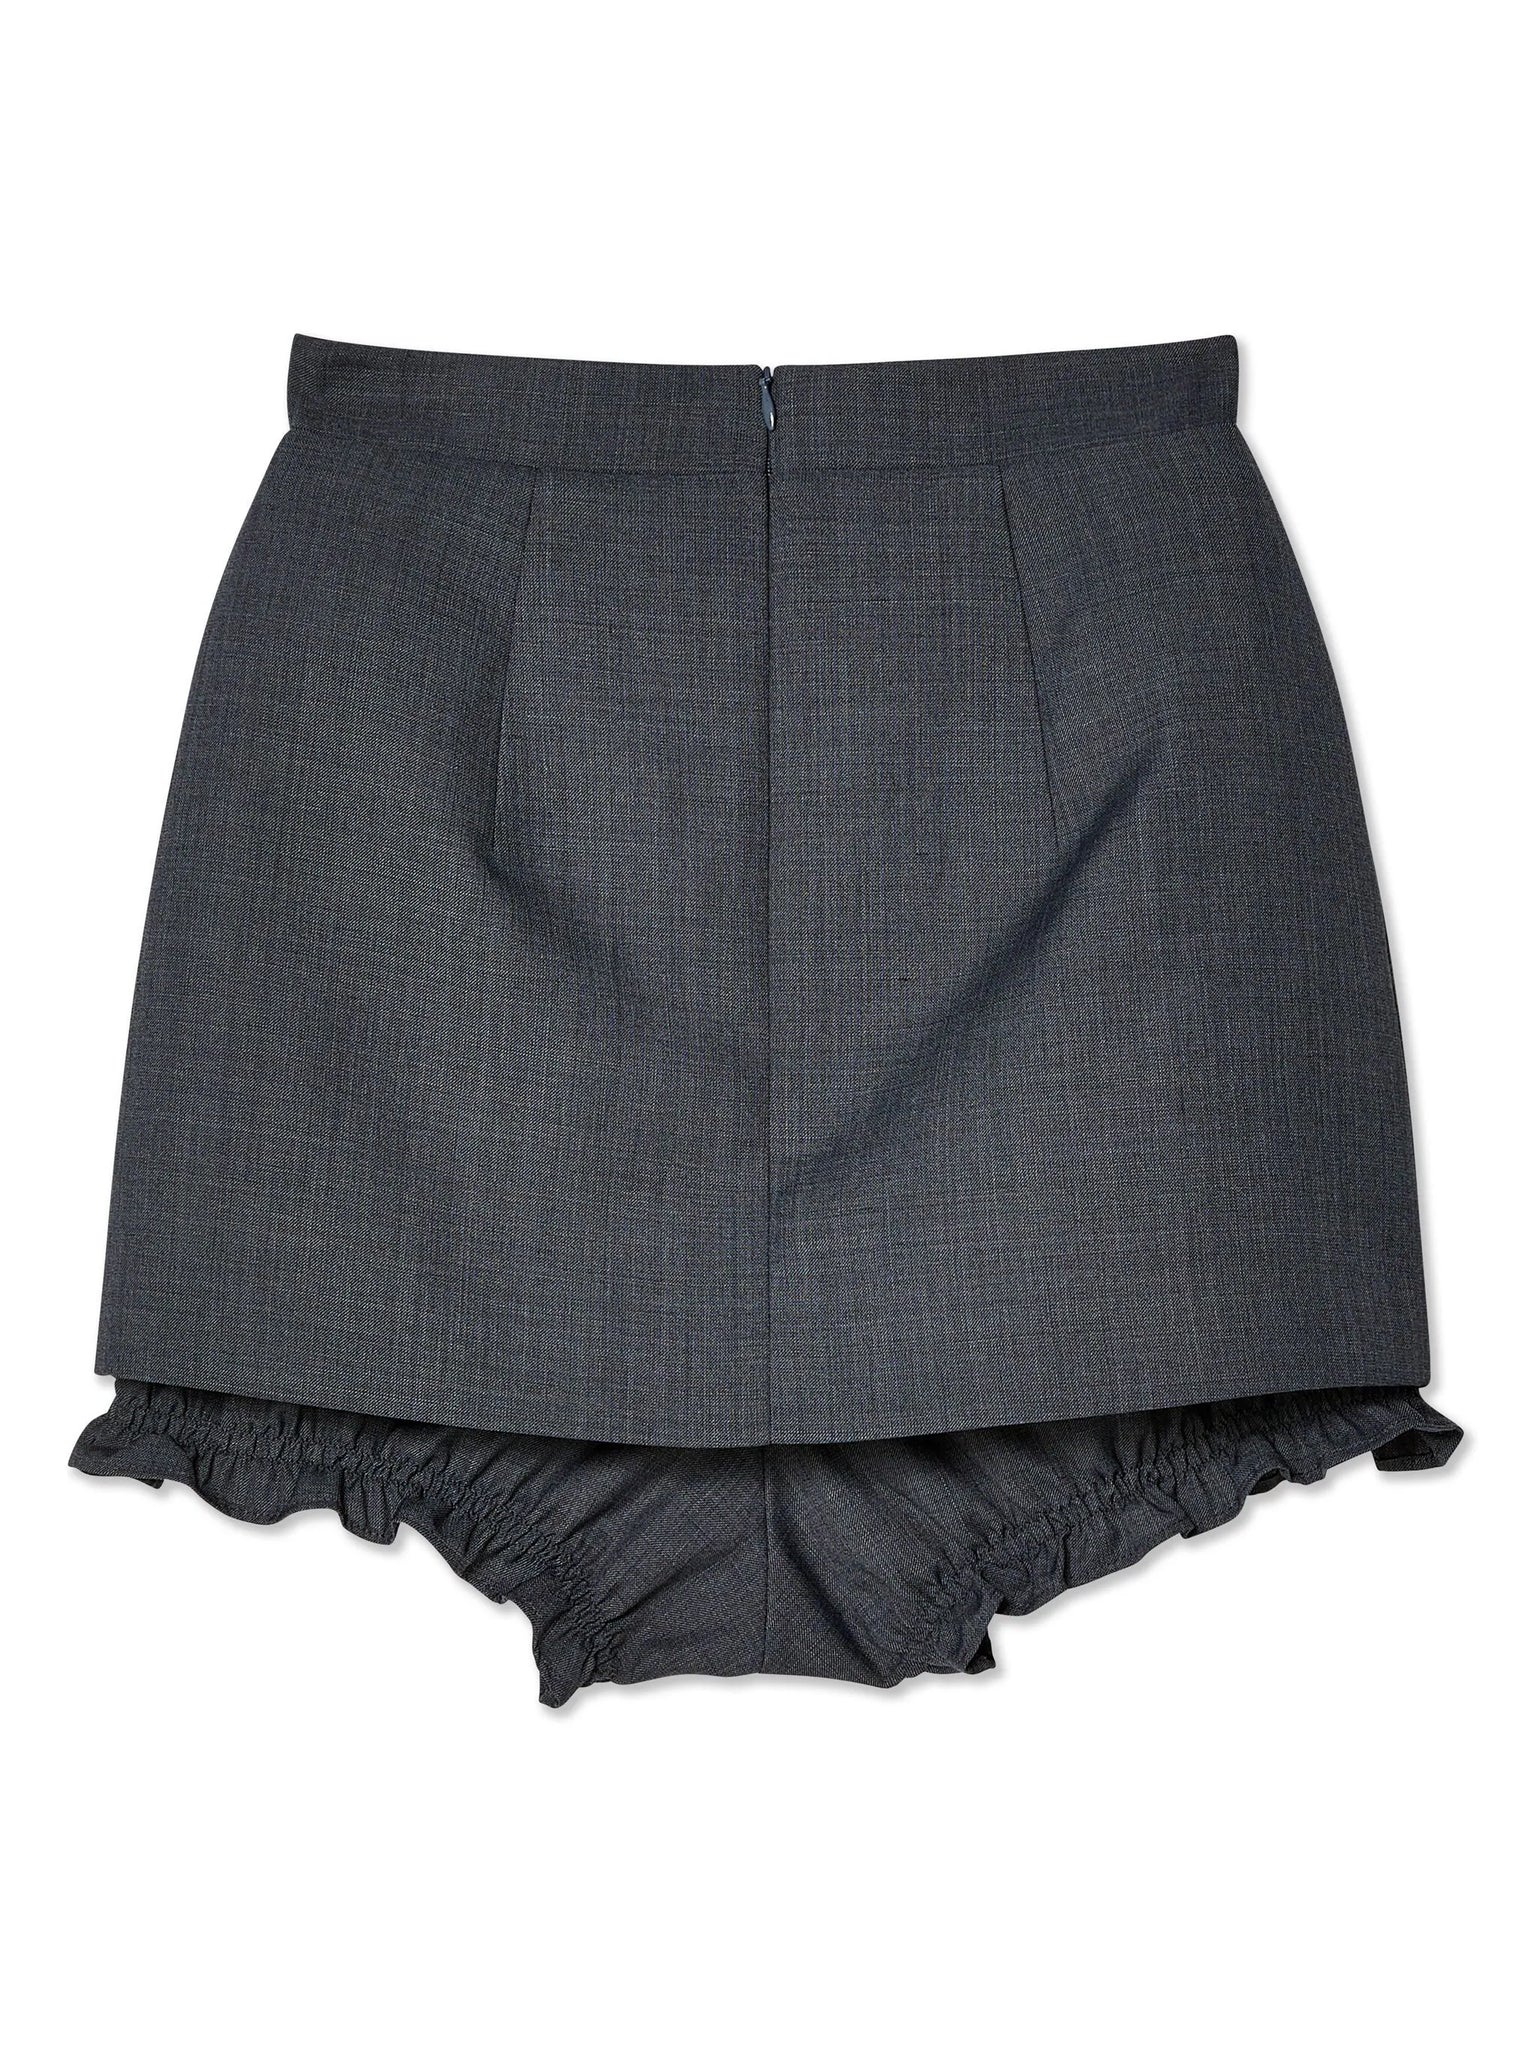 Double-Layered Mini Skirt in Grey